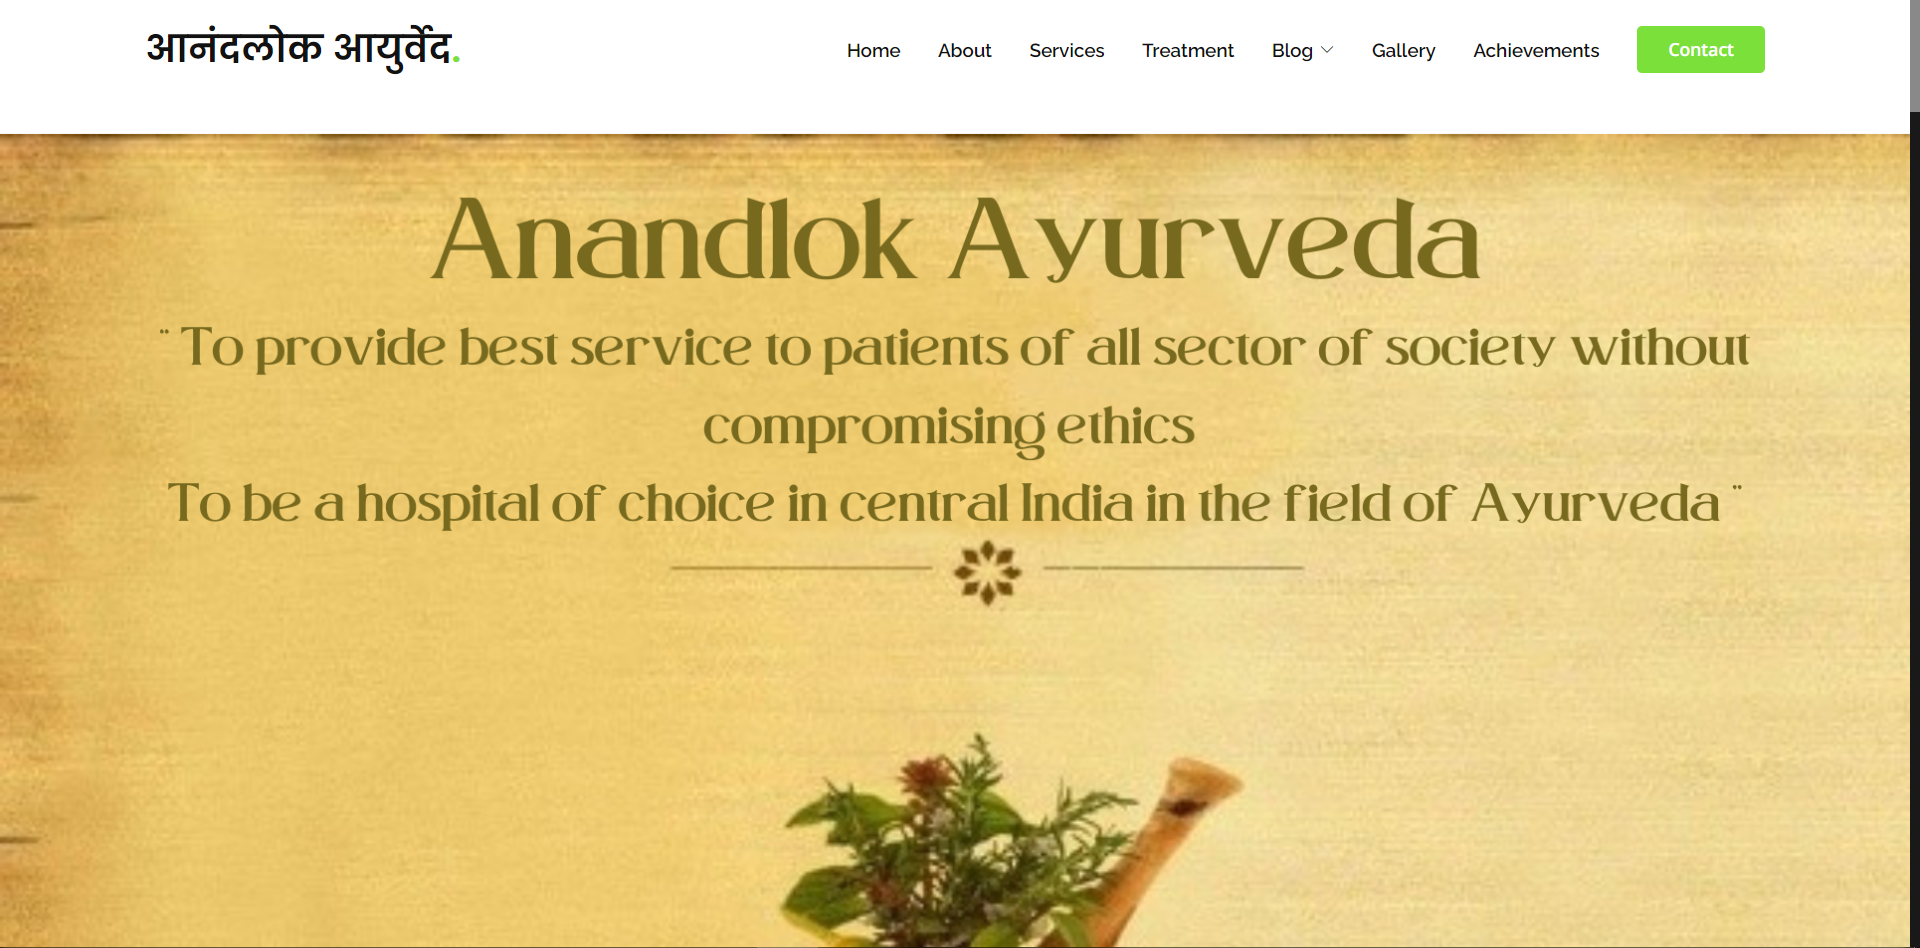 Anandlok Ayurveda